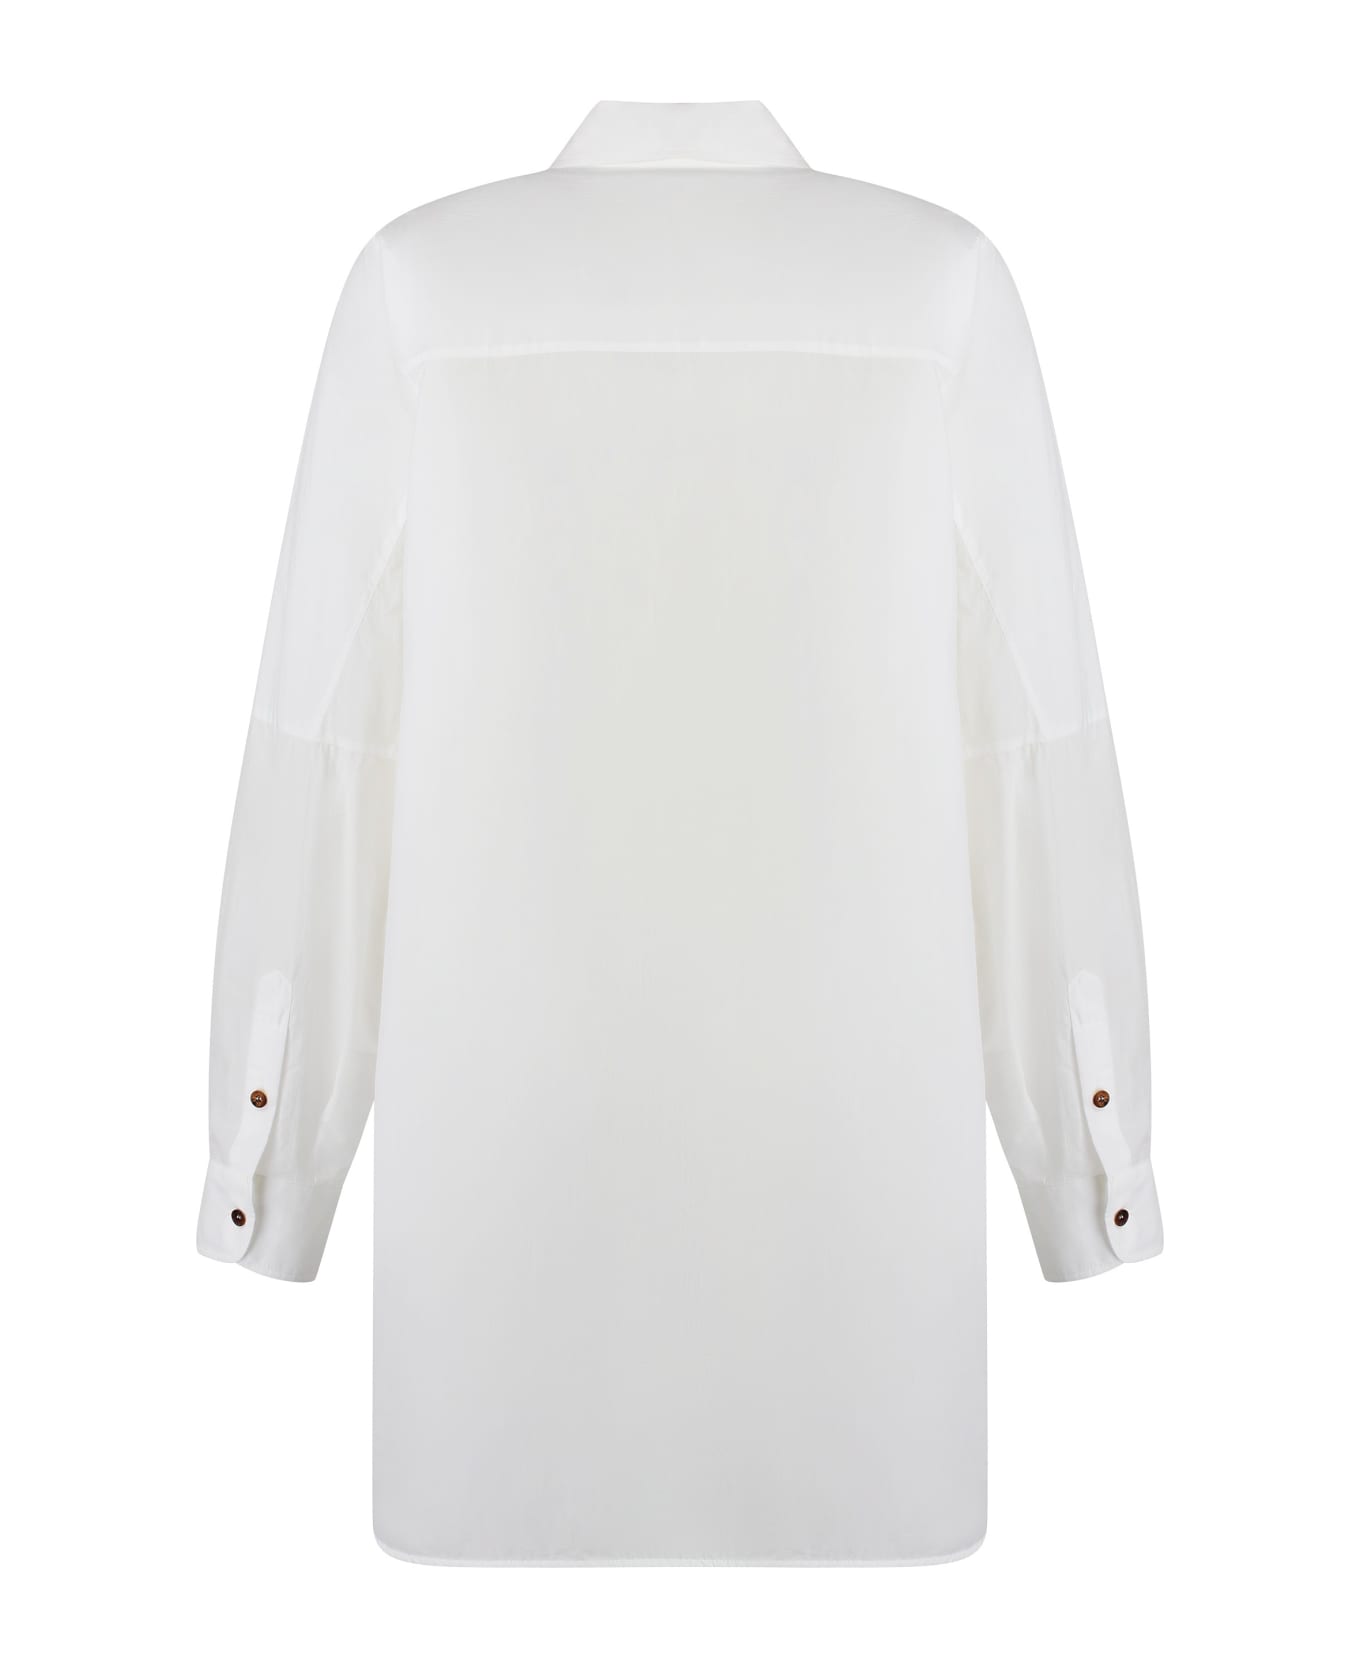 Philosophy di Lorenzo Serafini Cotton Blend Shirt - White